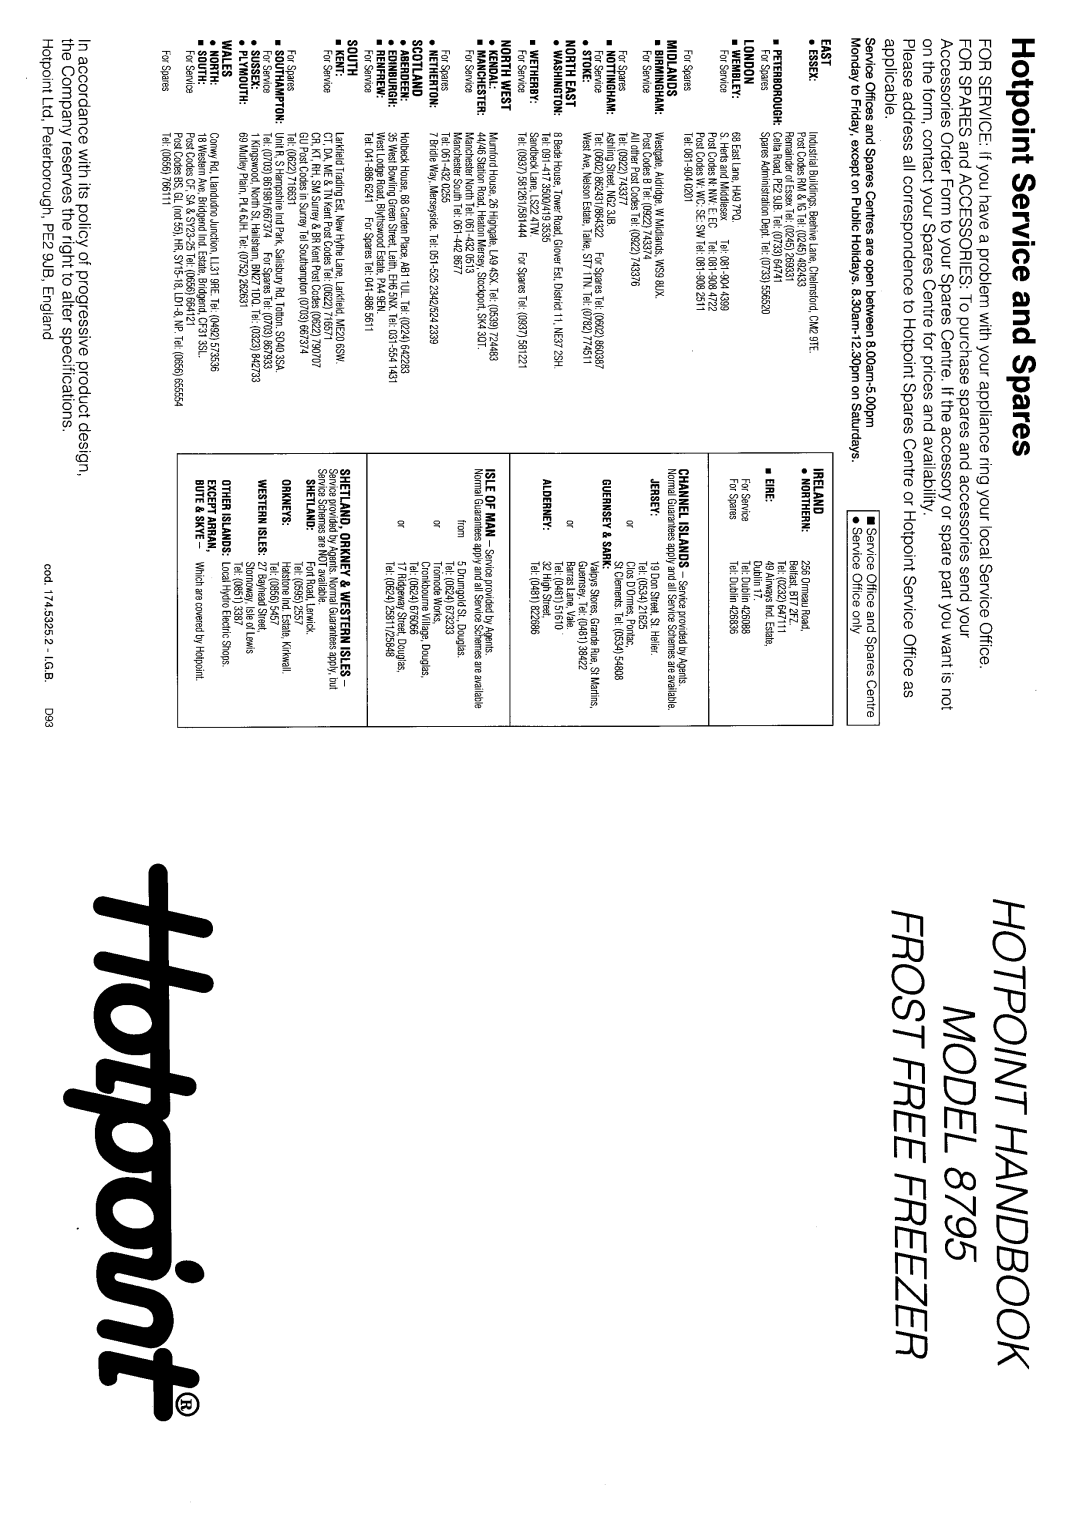 Hotpoint 8795 manual 